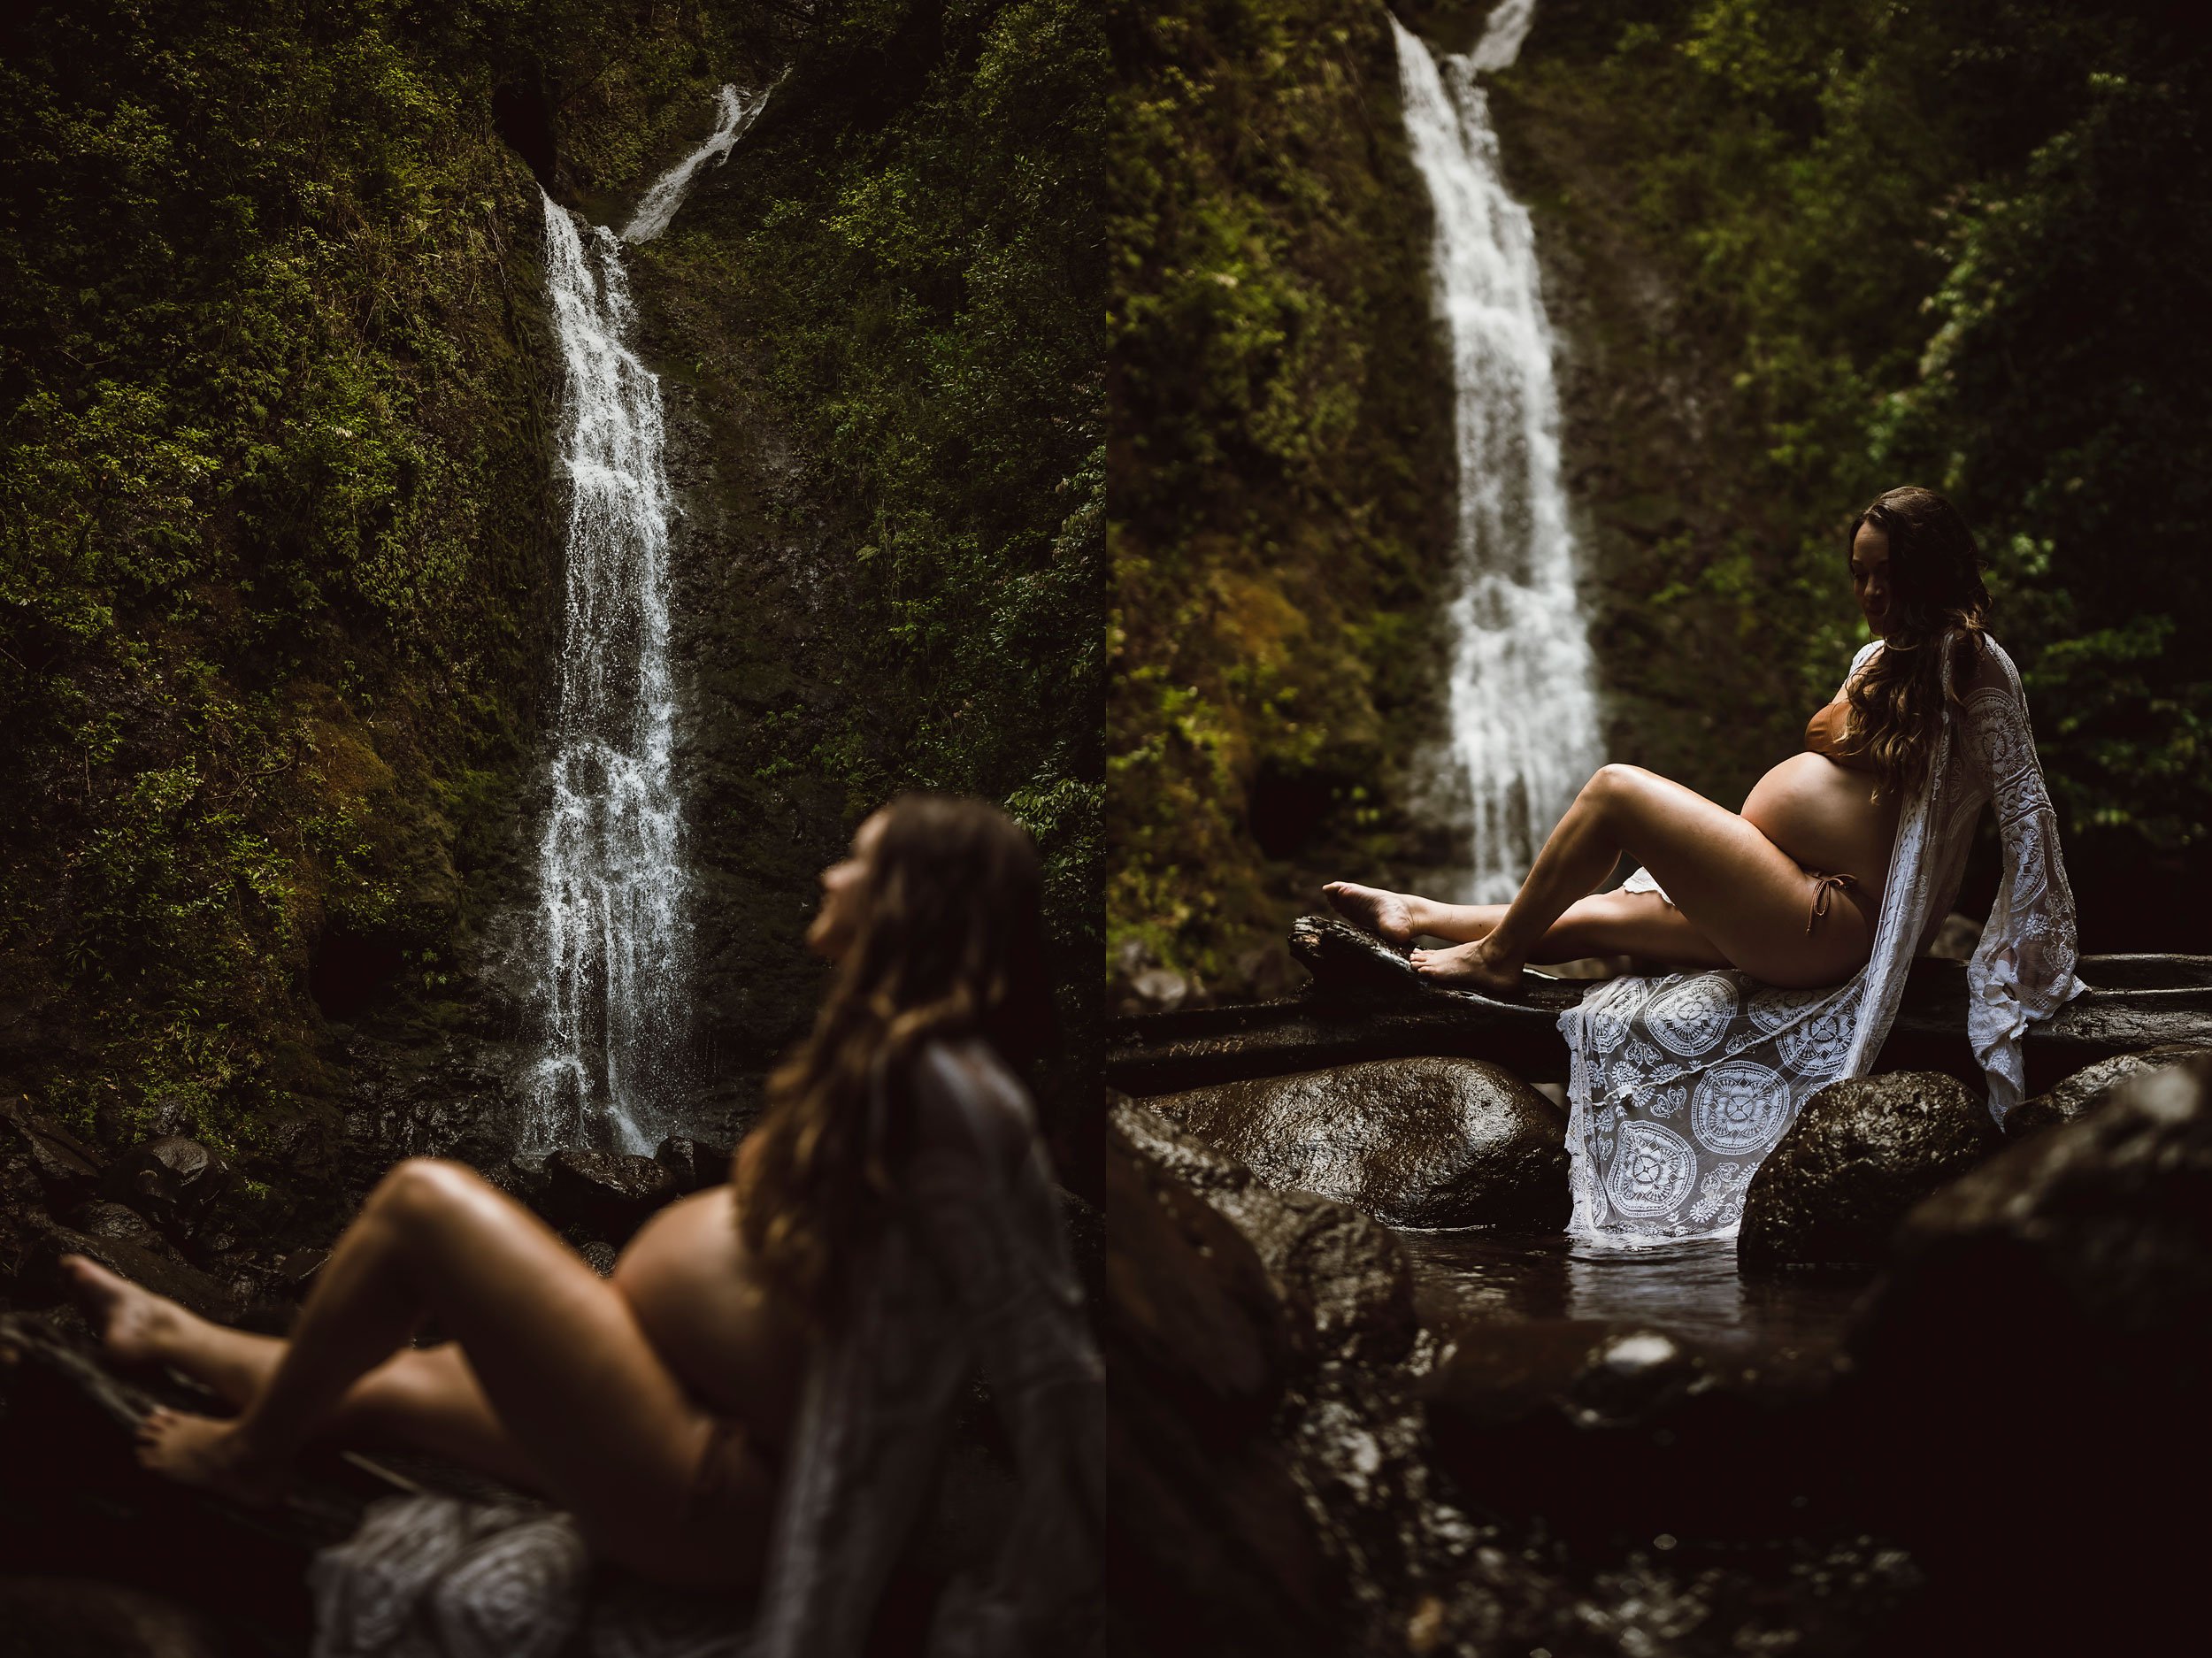 oahu-hawaii-waterfall-maternity-photos-lulumahu-03.jpg